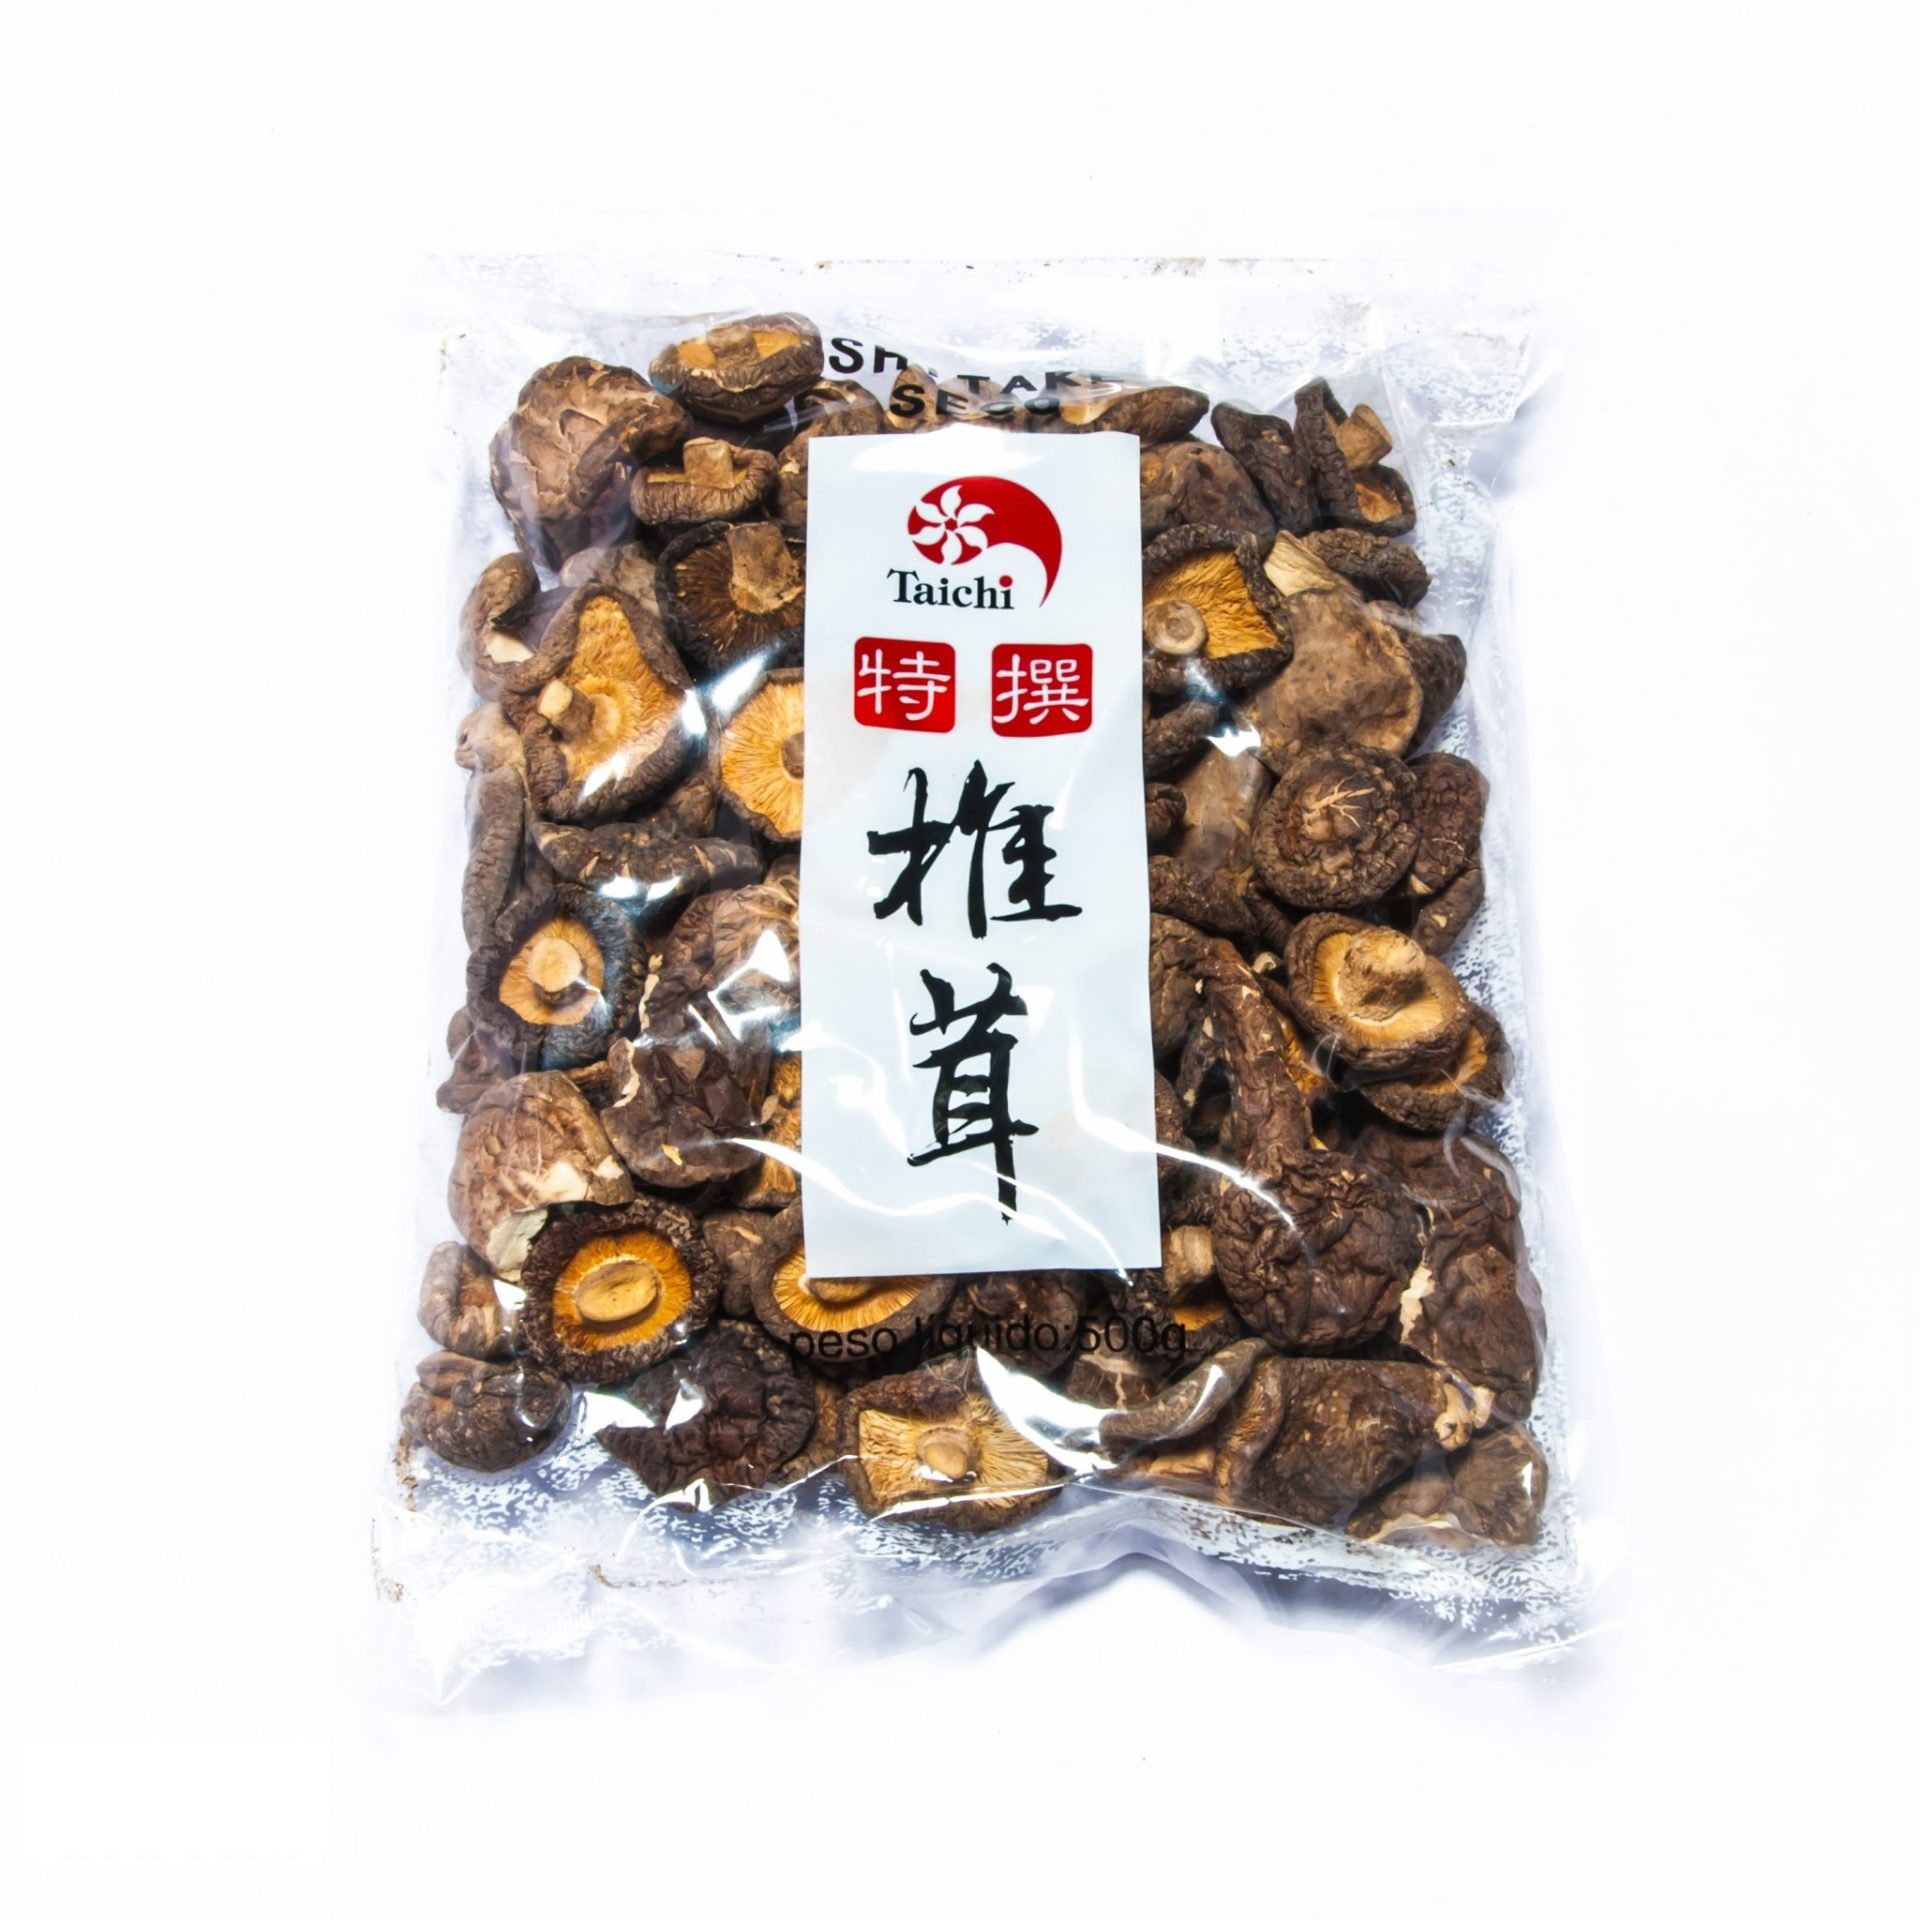 Cogumelos Shitake desidratados